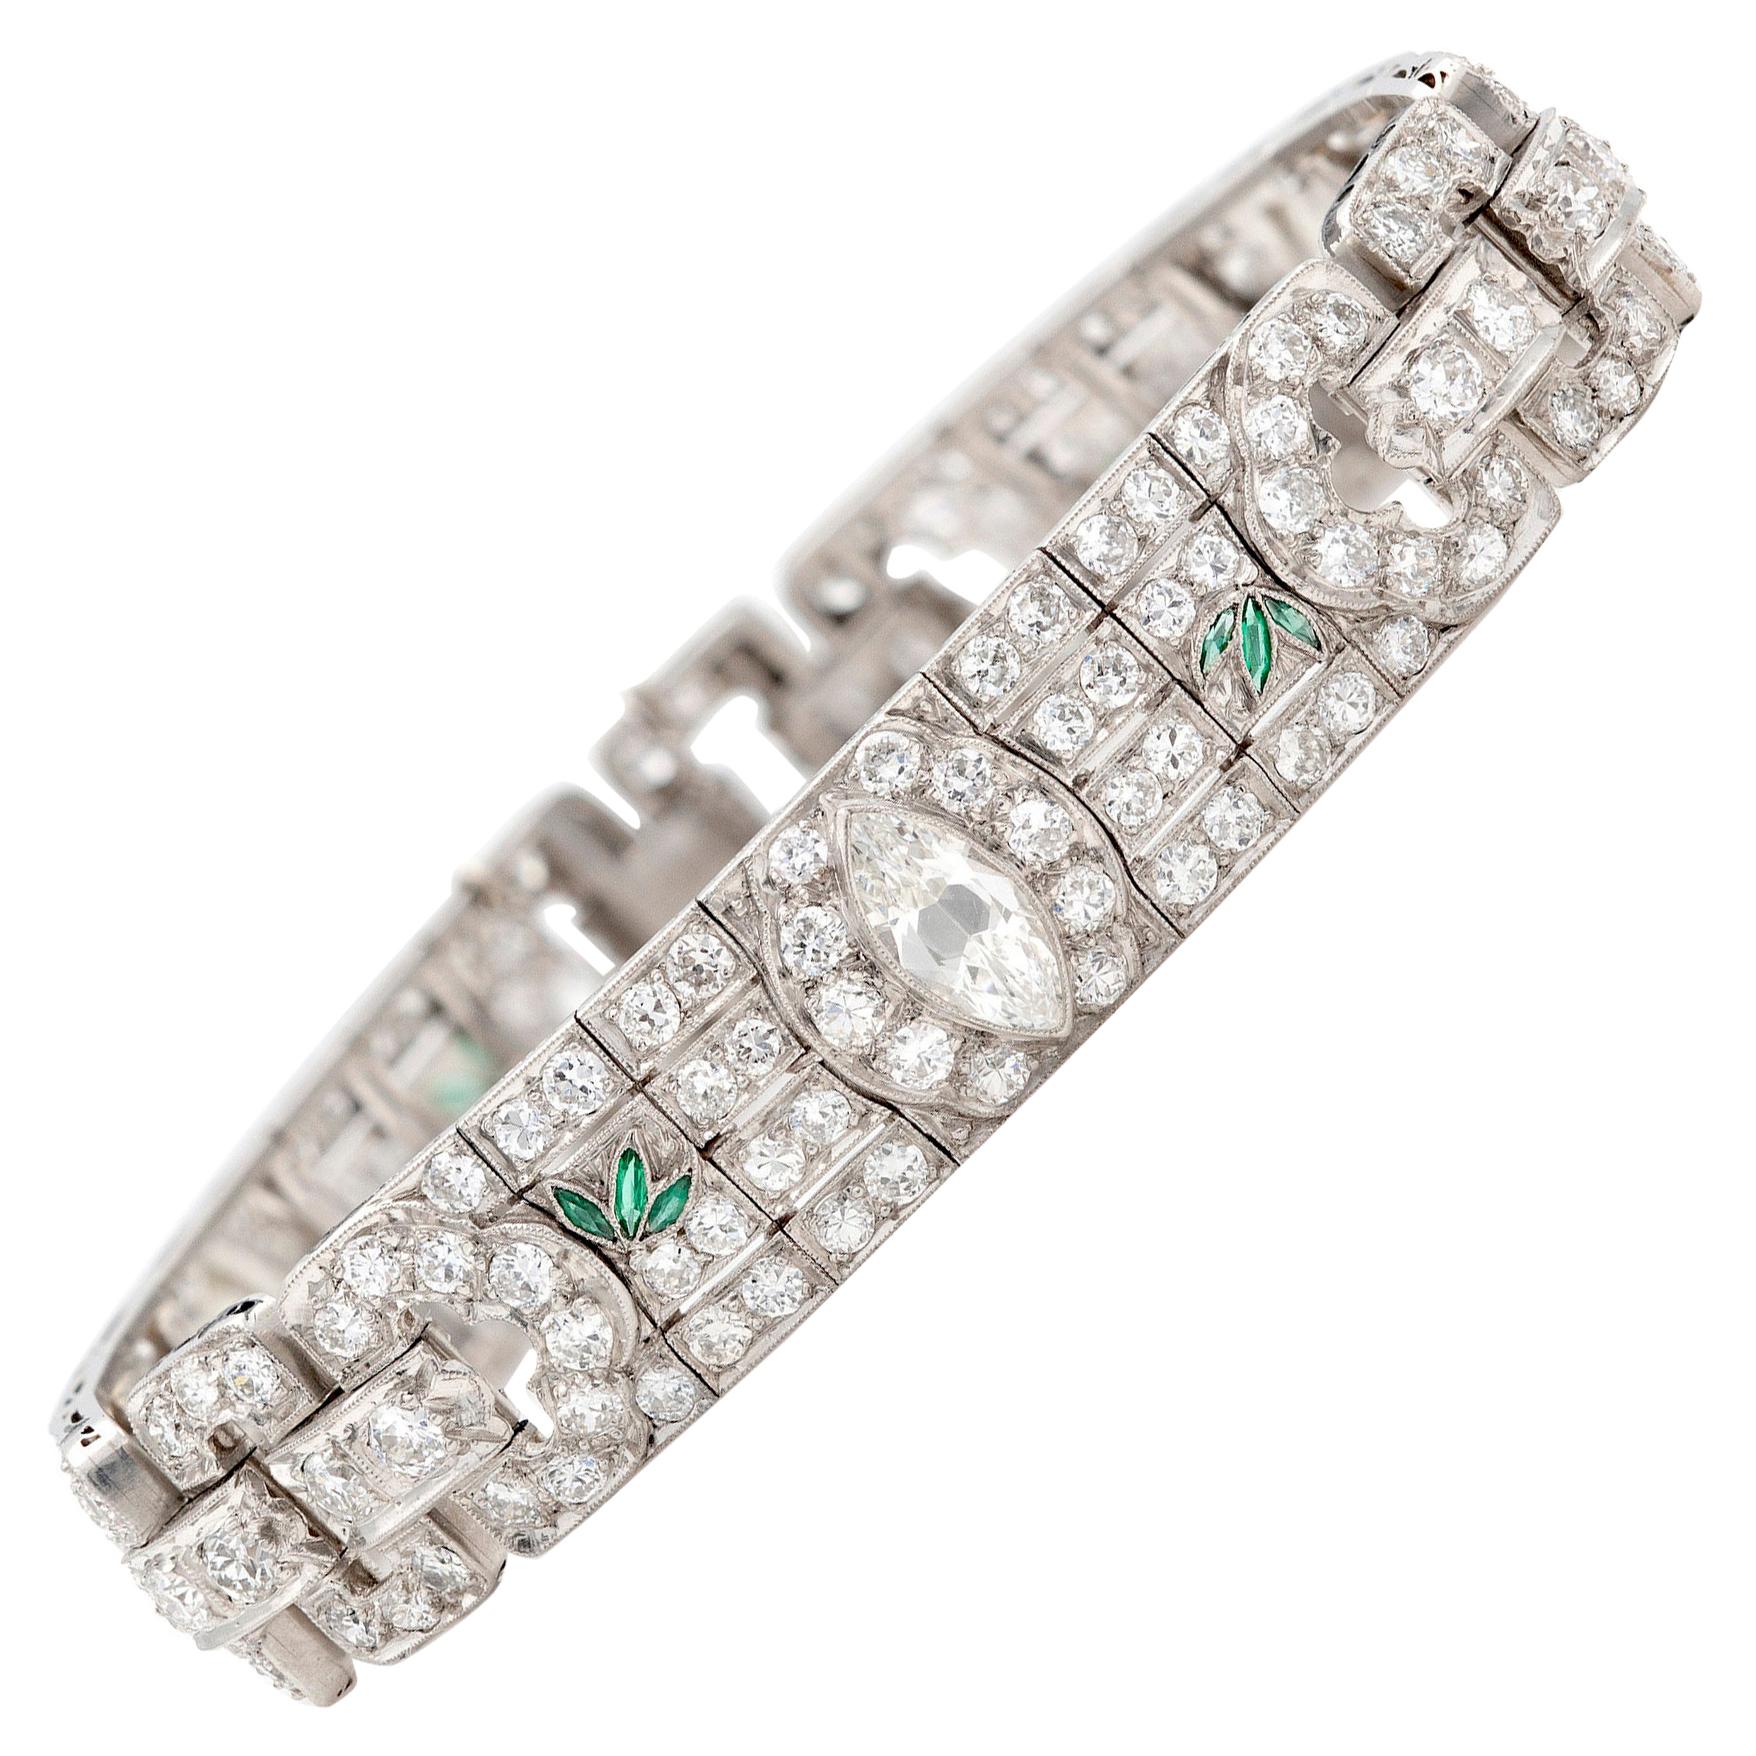 Art Deco Diamond Bracelet with Emerald